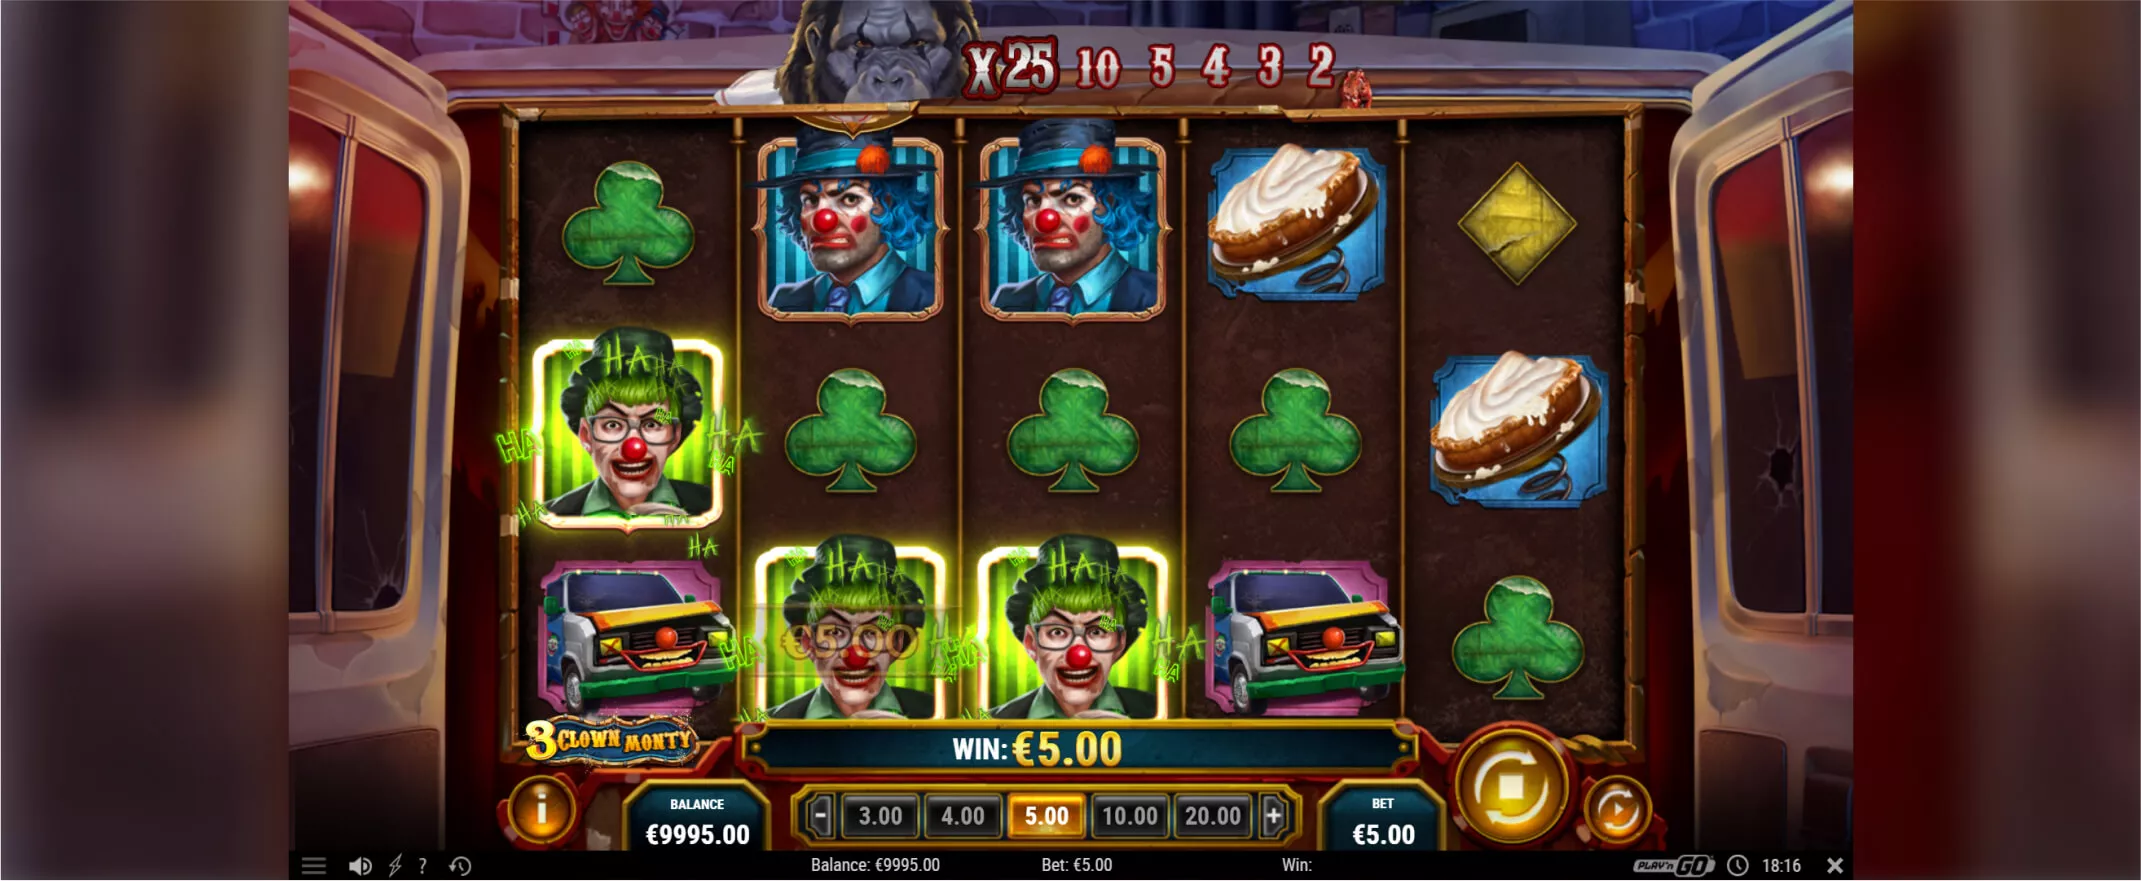 3 Clown Monty slot screenshot of the reels